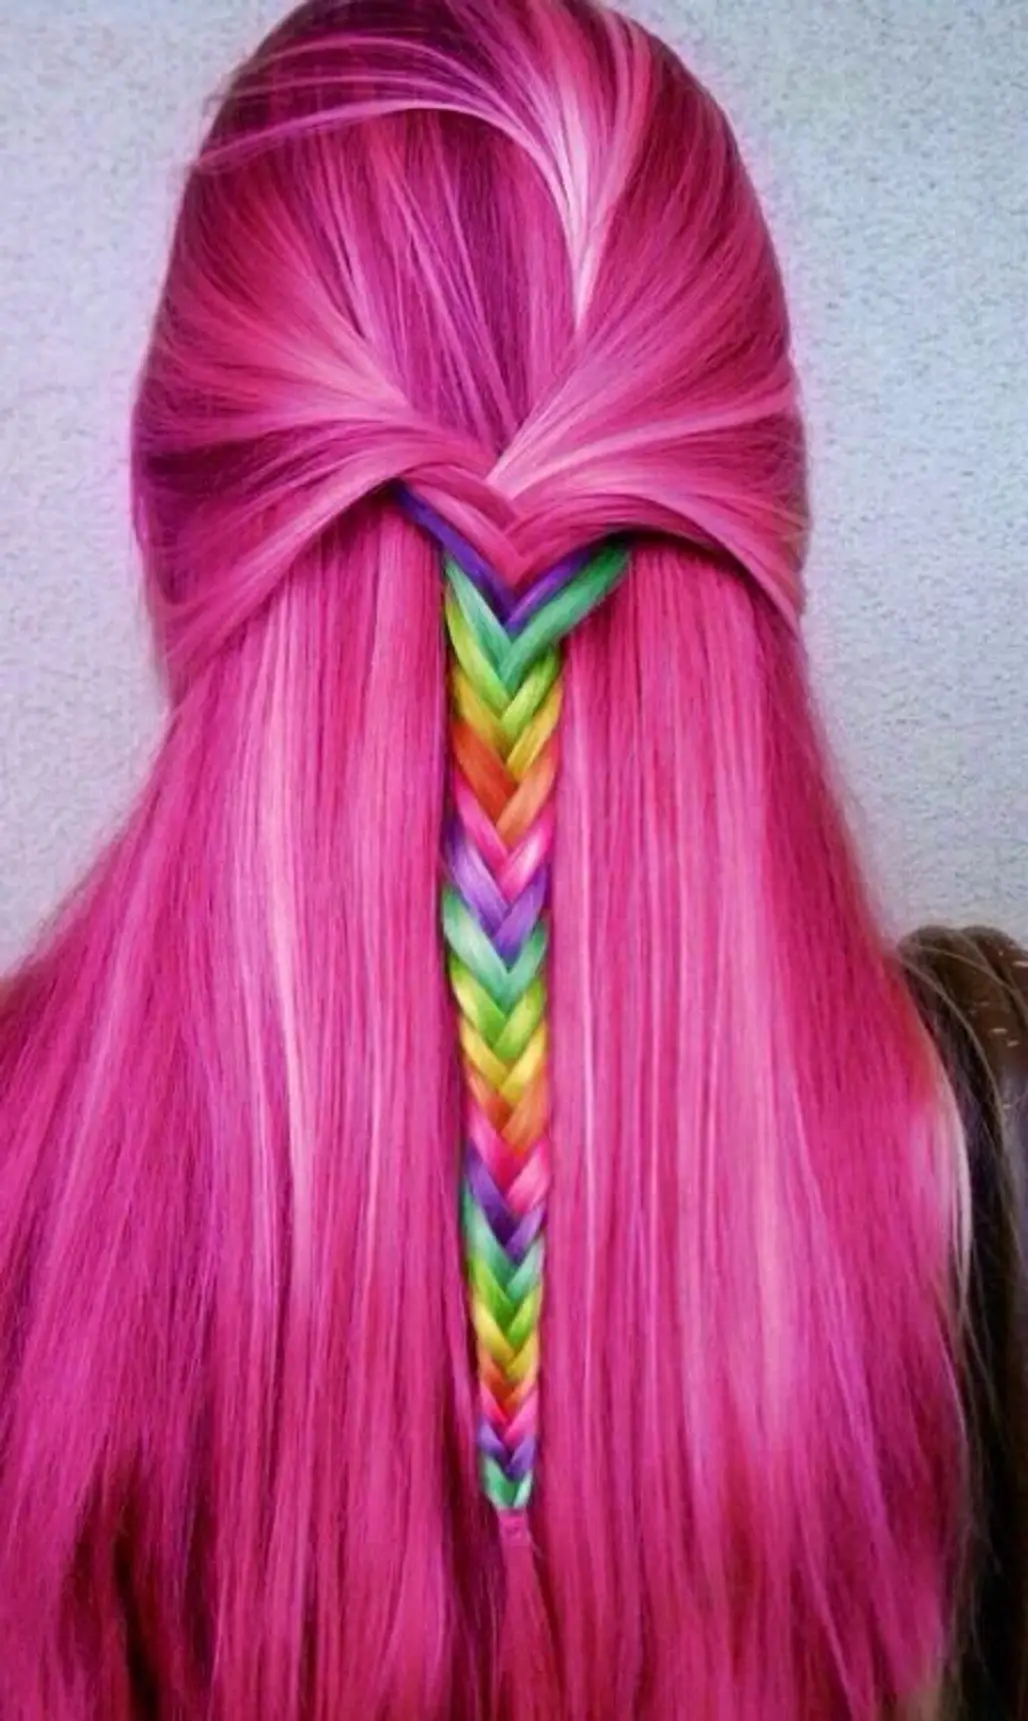 pink,hair,clothing,purple,hair coloring,